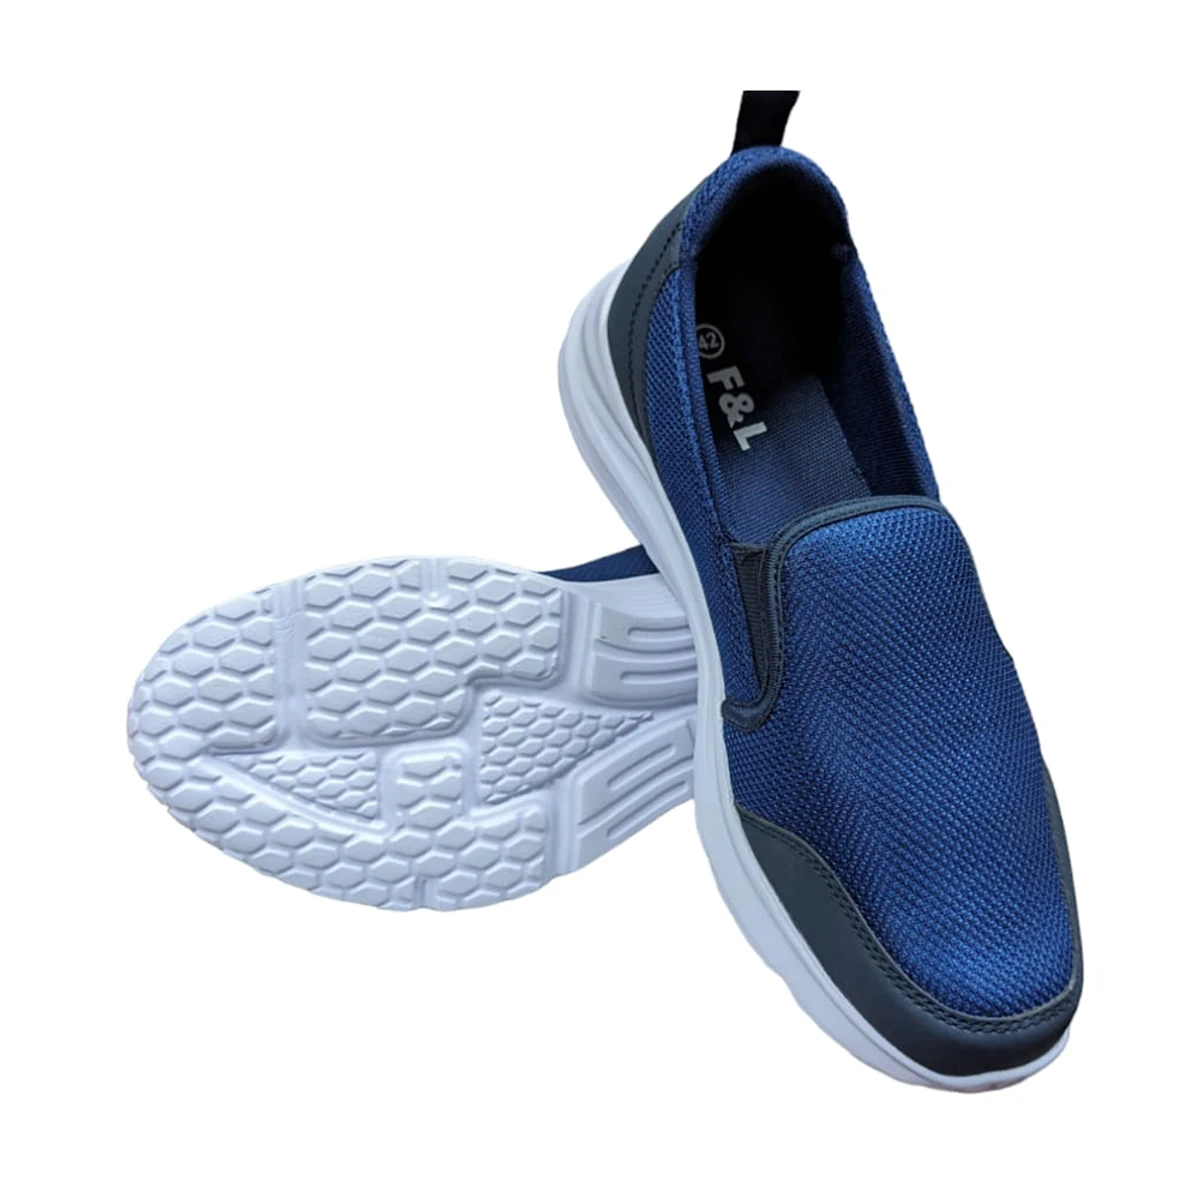 Lightweight Unisex Mesh Walking Sports Shoes - Blue - FLMN-20